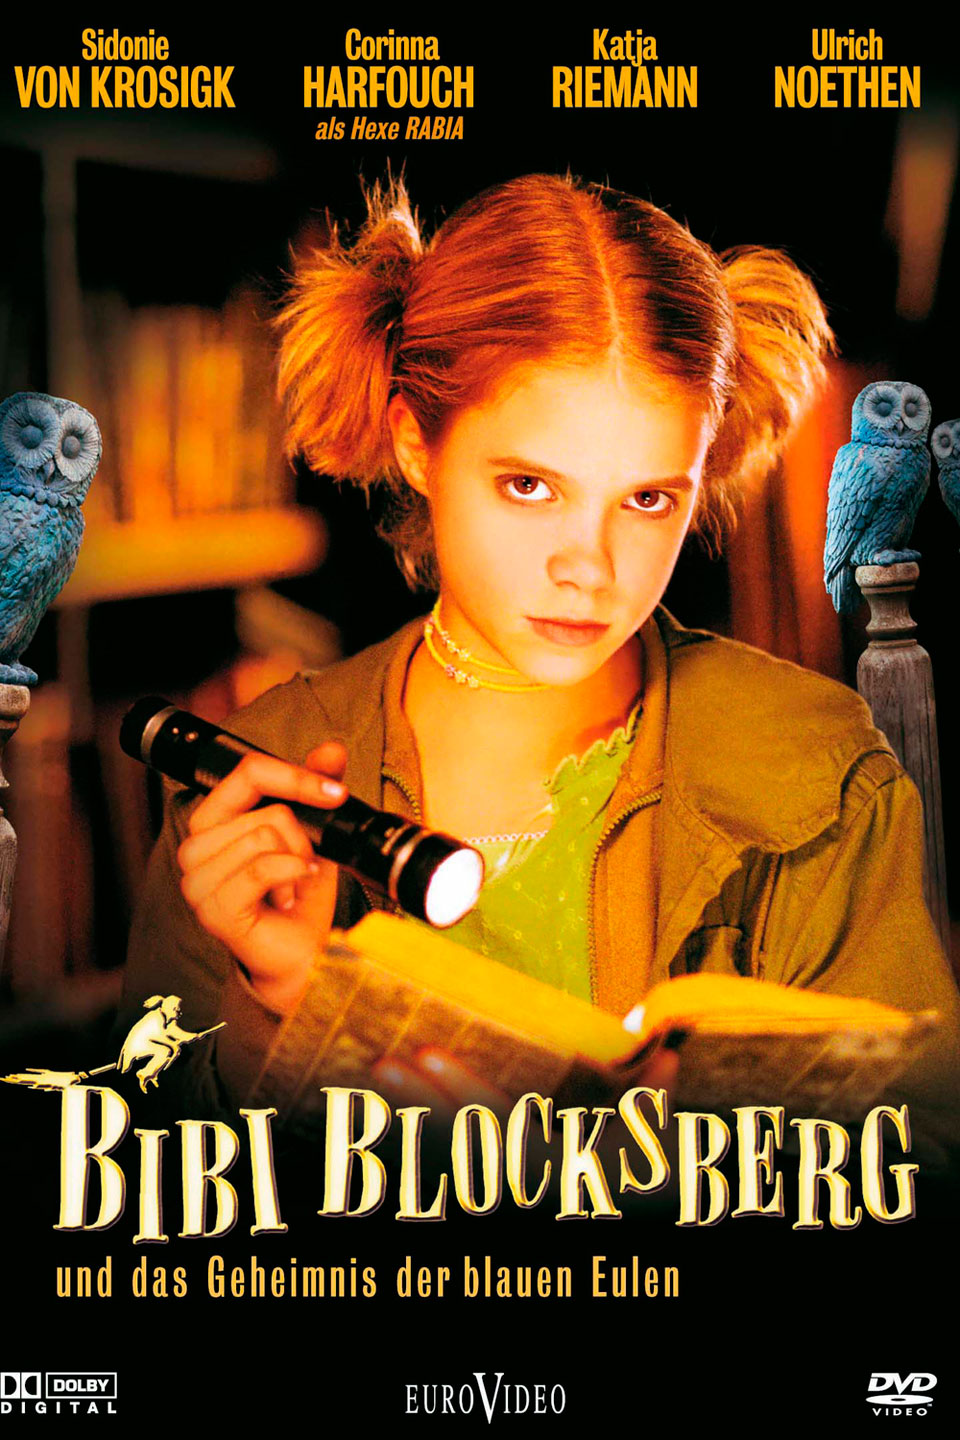 Poster zum Bibi Blocksberg - Bild 2 - FILMSTARTS.de